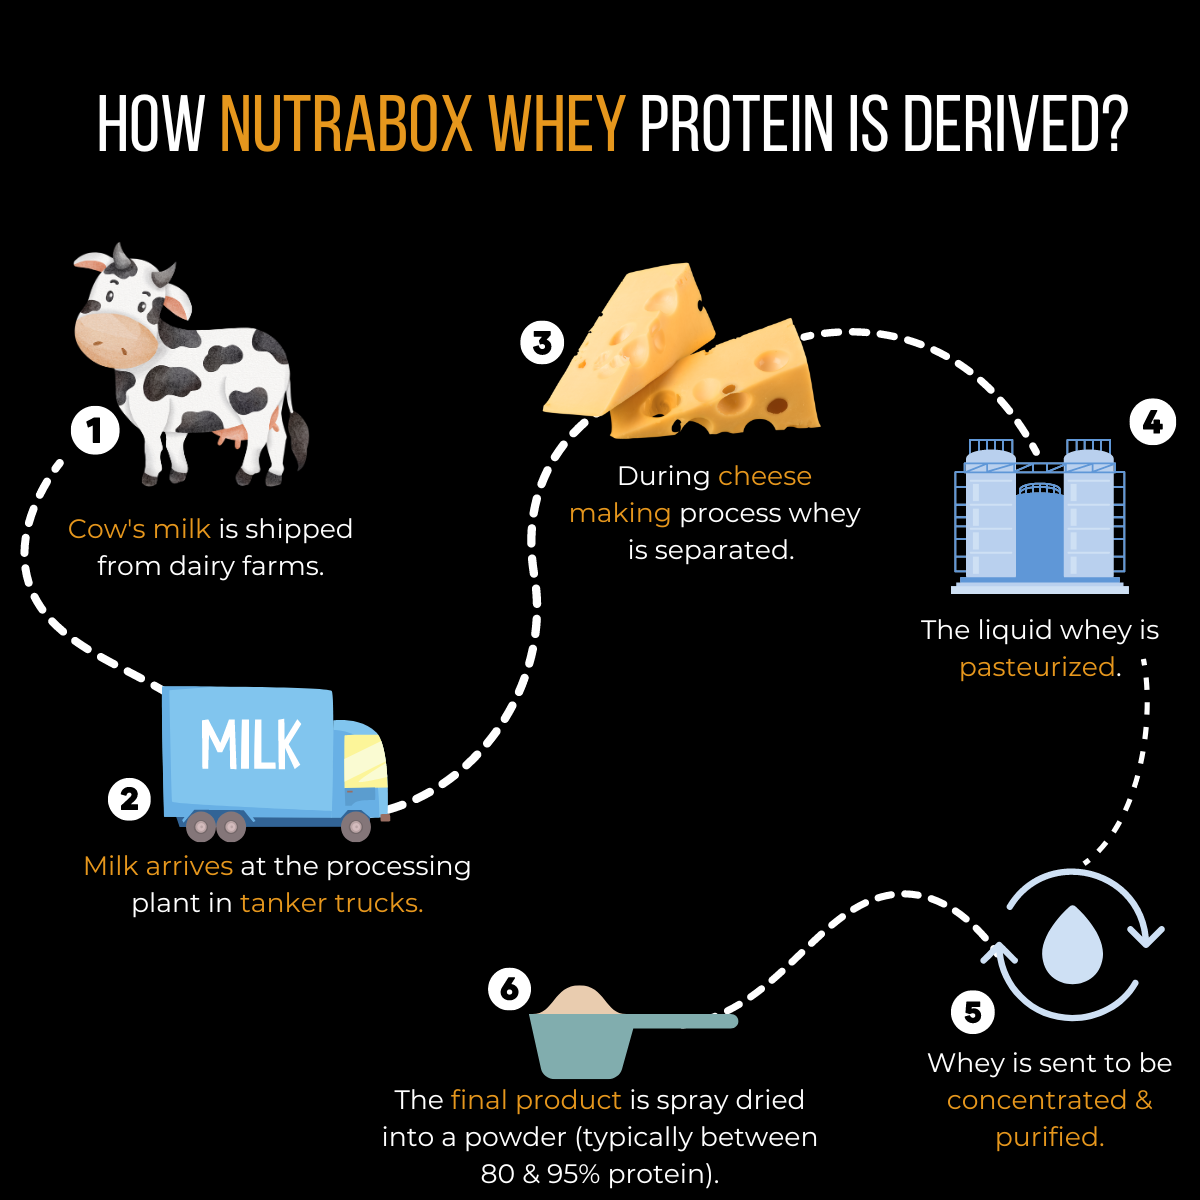 Nutrabox 100% whey protein powder